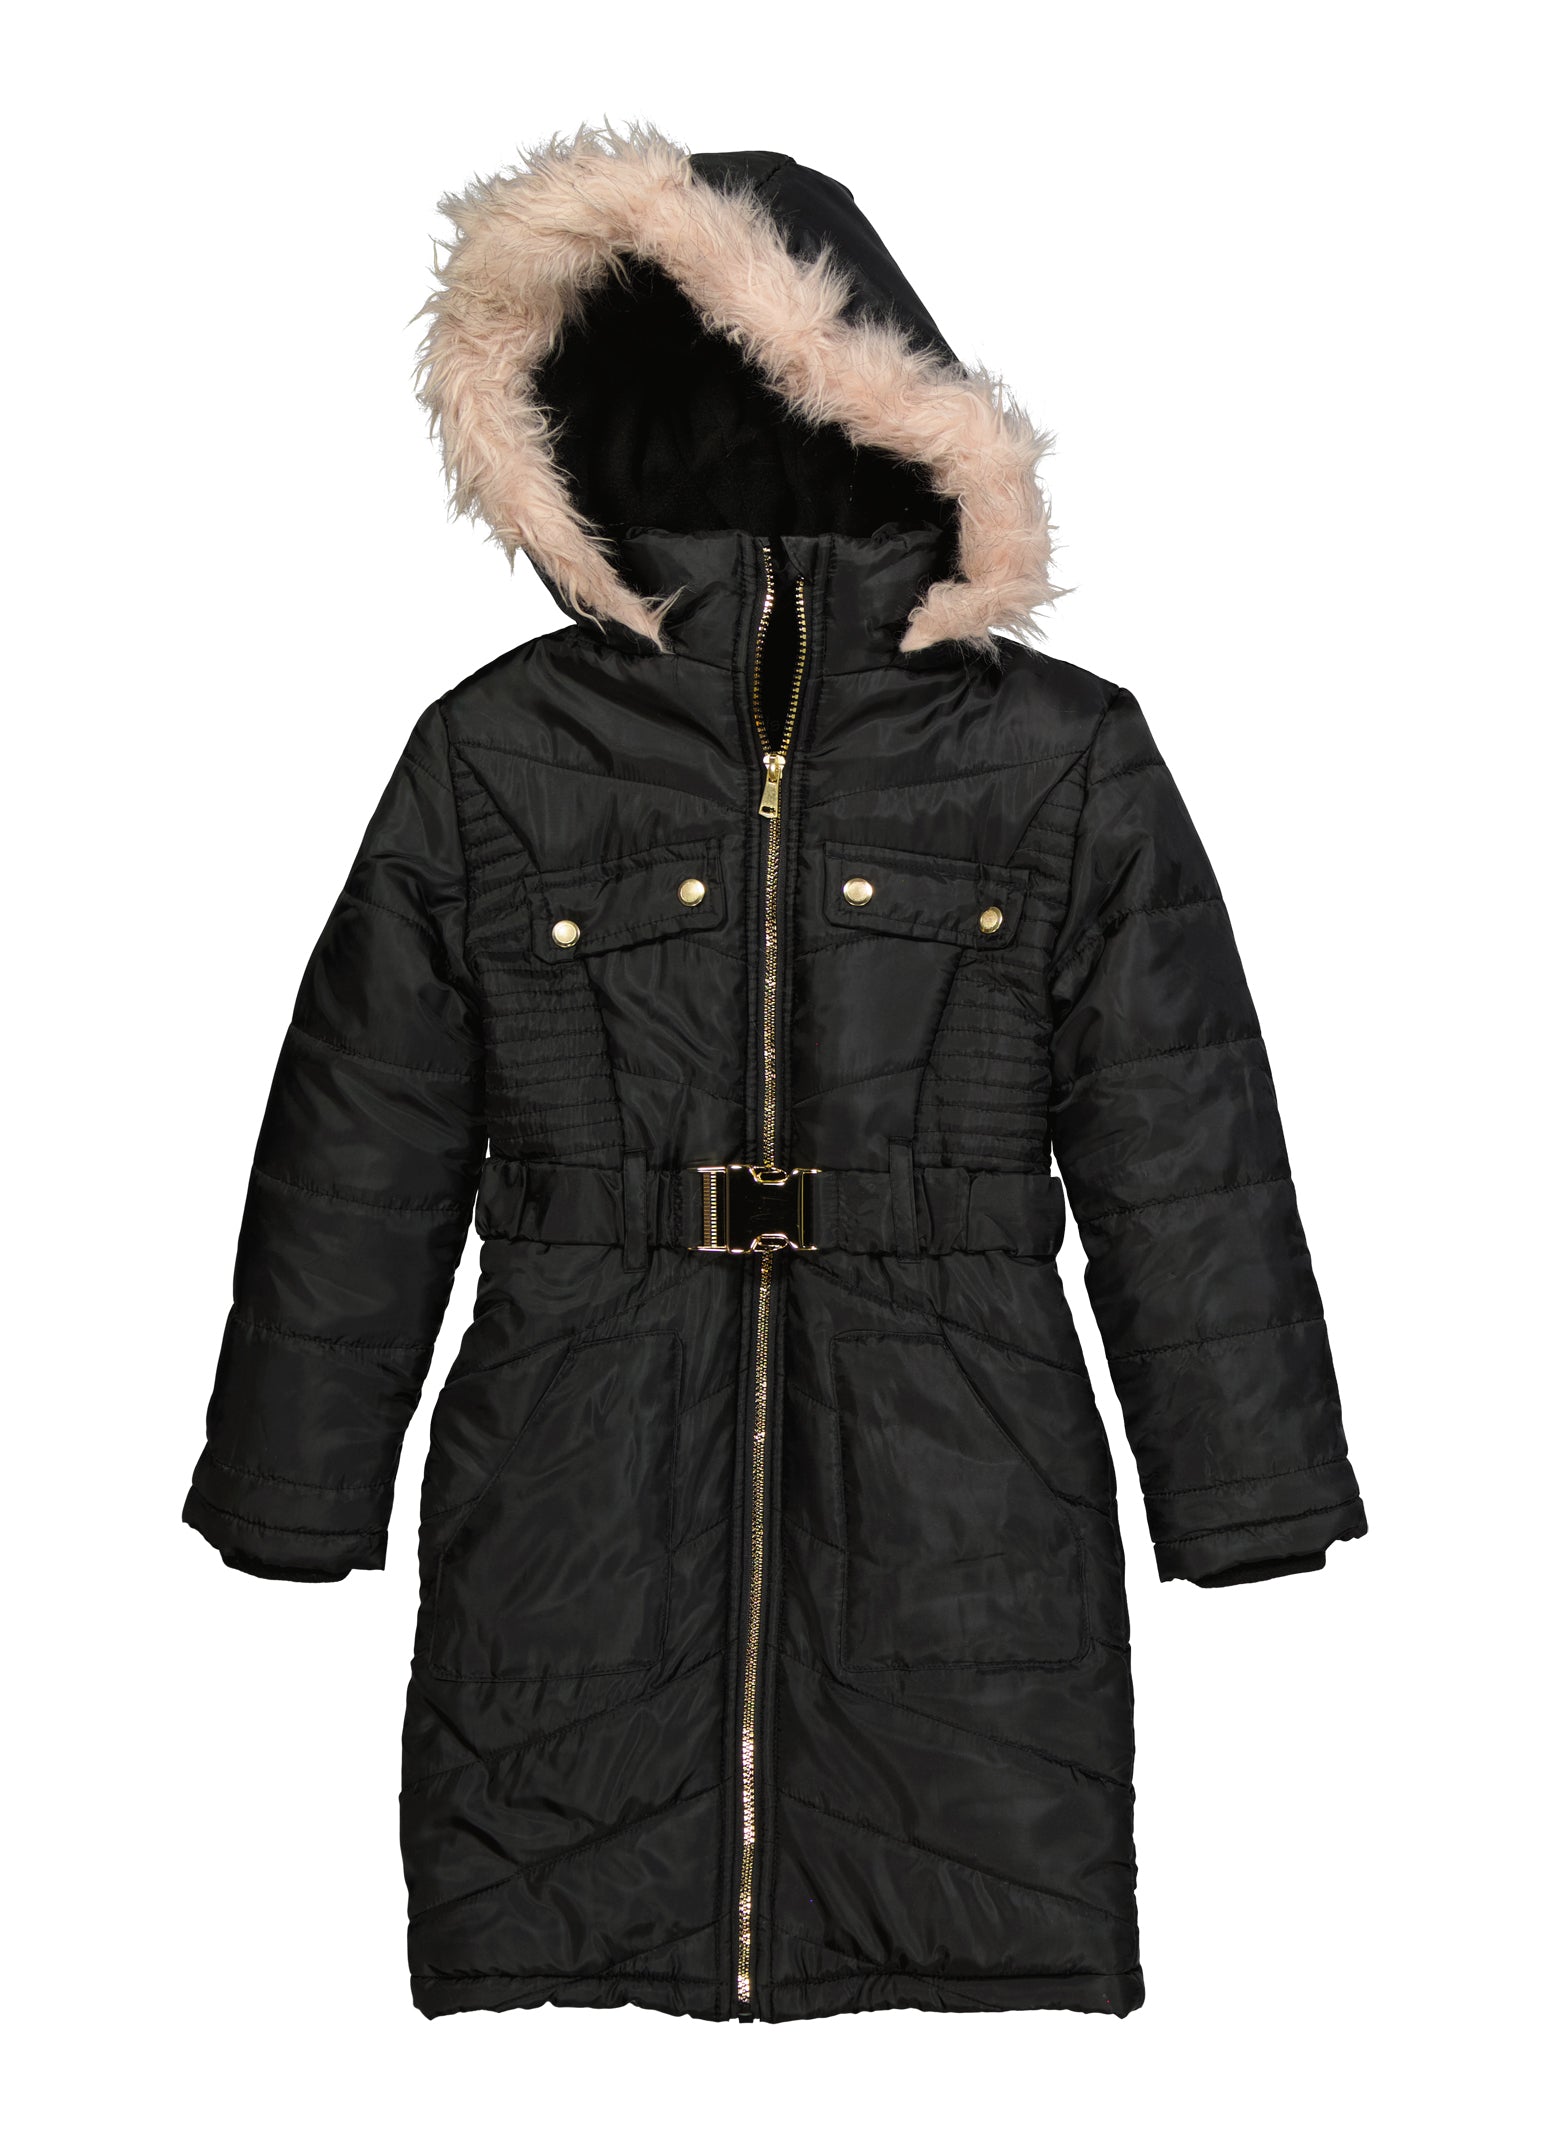 Girls Belted Faux Fur Trim Longline Puffer Jacket, Black, Size 10-12